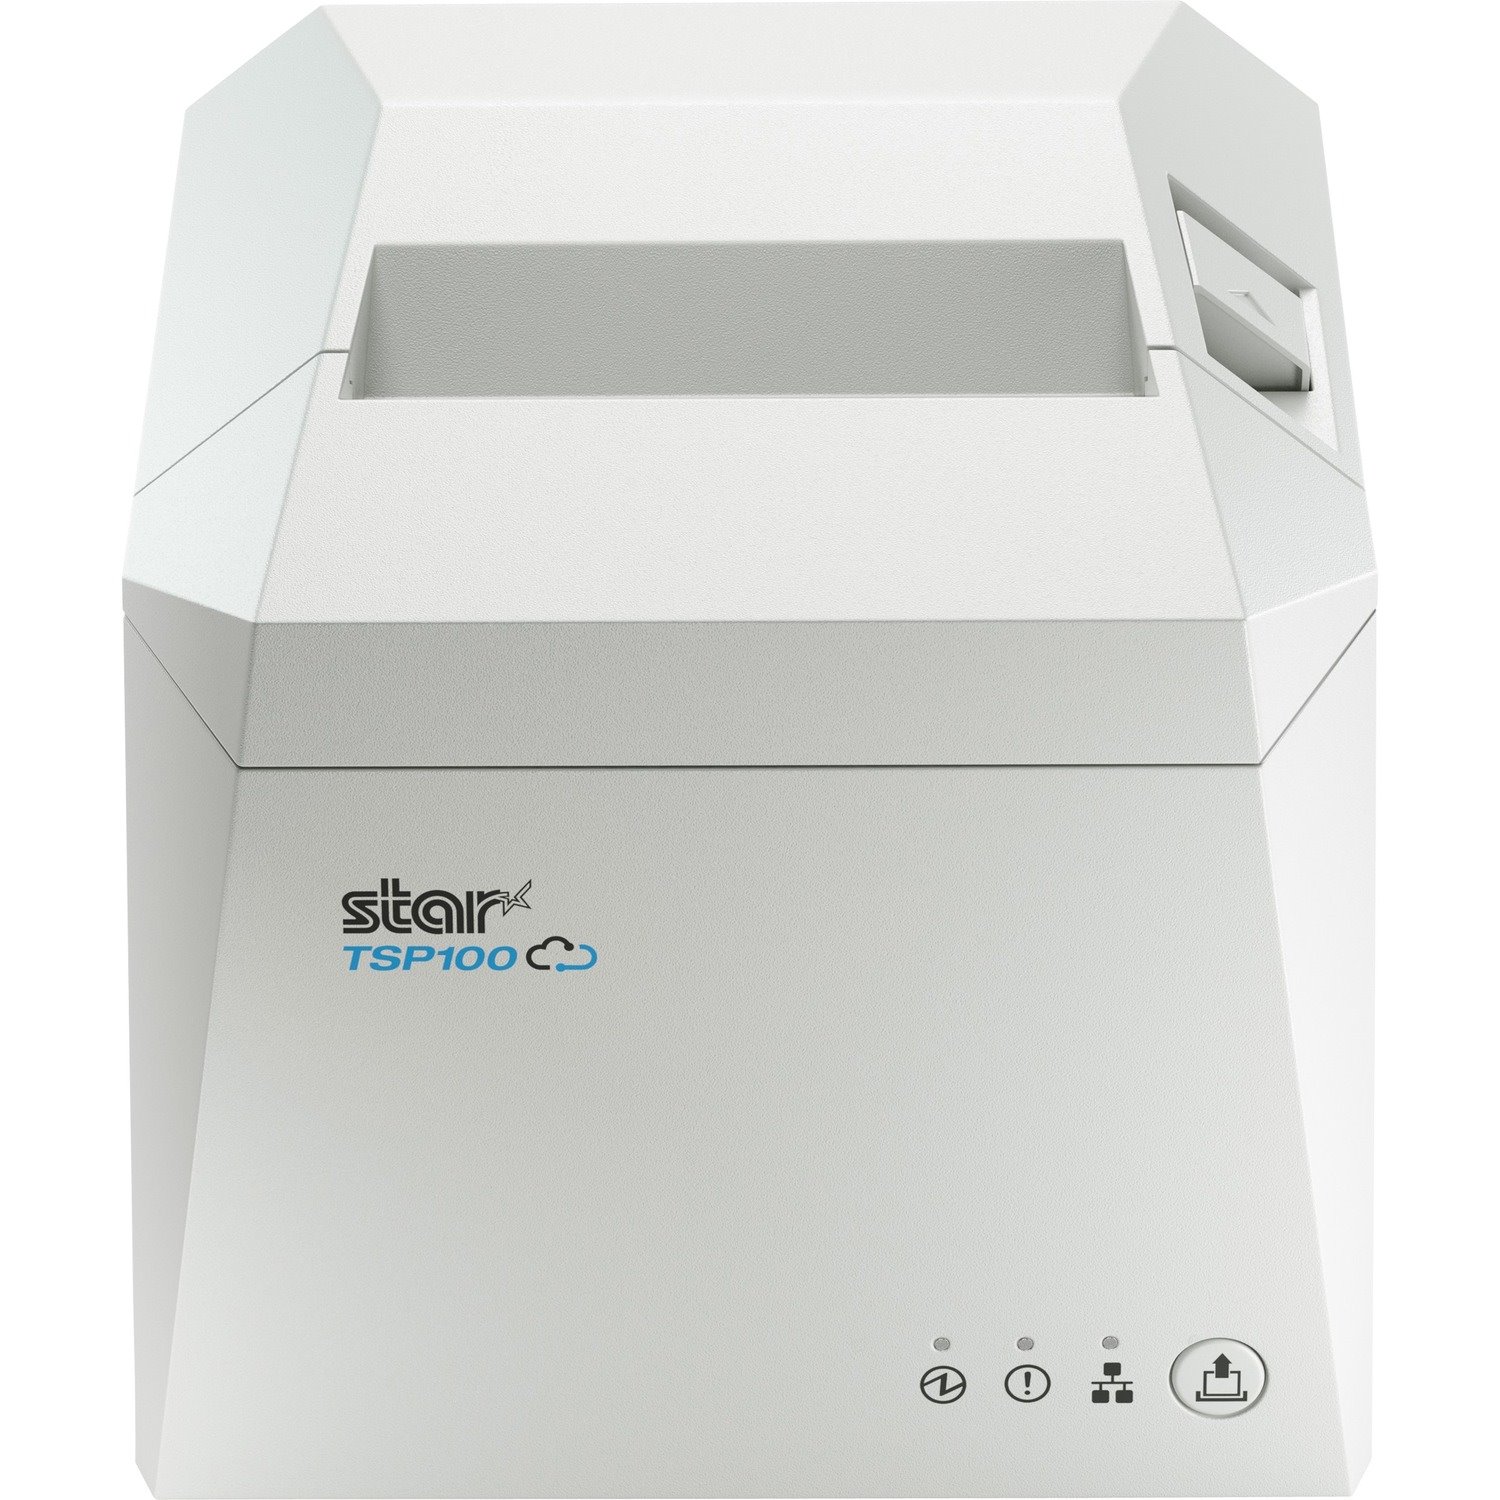 Star Micronics TSP143IV UE WHT E+U Retail Direct Thermal Printer - Monochrome - Wall Mount - Receipt Print - Ethernet - USB - UK, EU - With Cutter - White